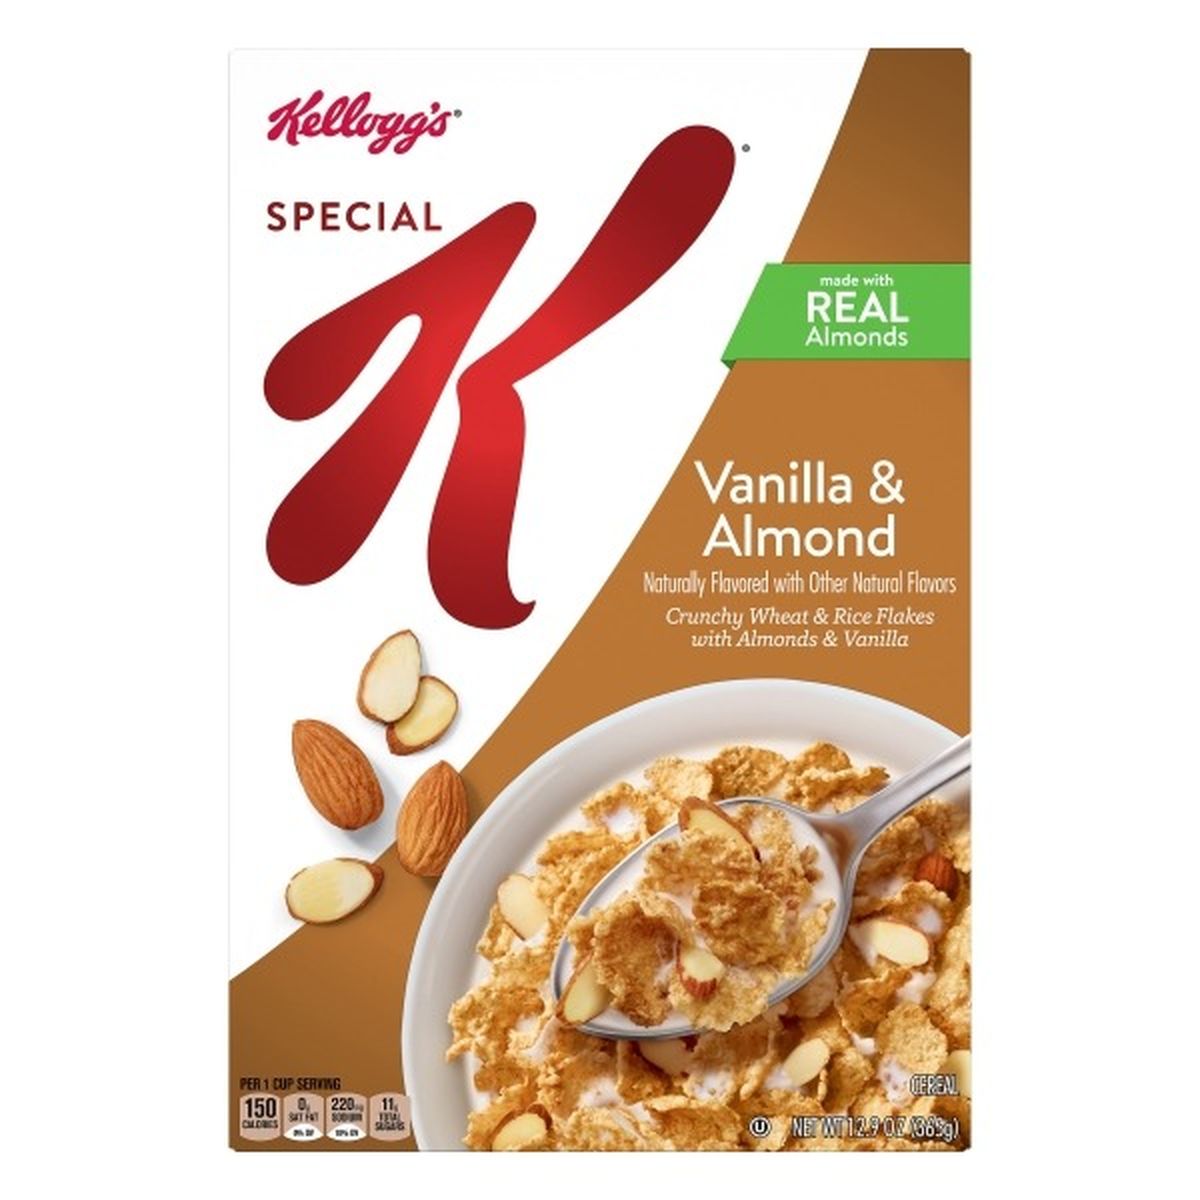 Calories in Kellogg's Special K Cereal, Vanilla & Almond